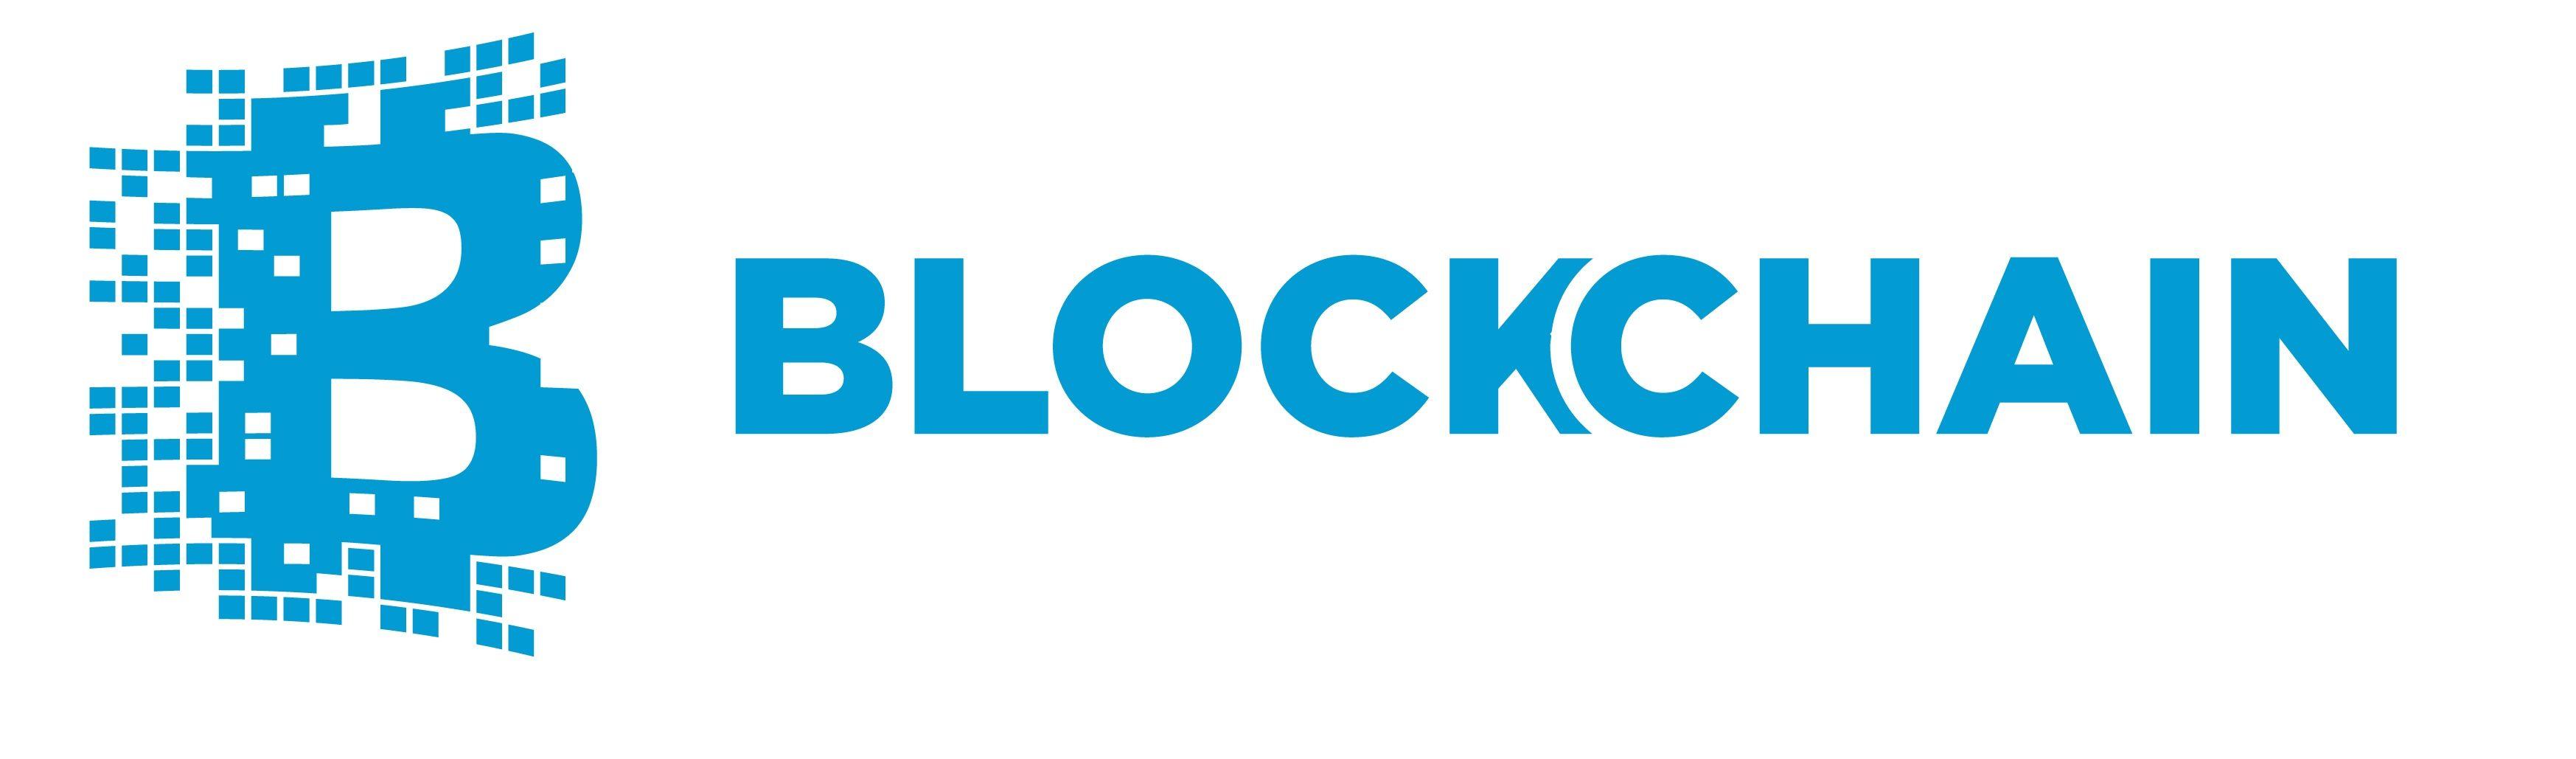 Blockchain App Logo - Blockchain Logo - Bitcoin PR Buzz